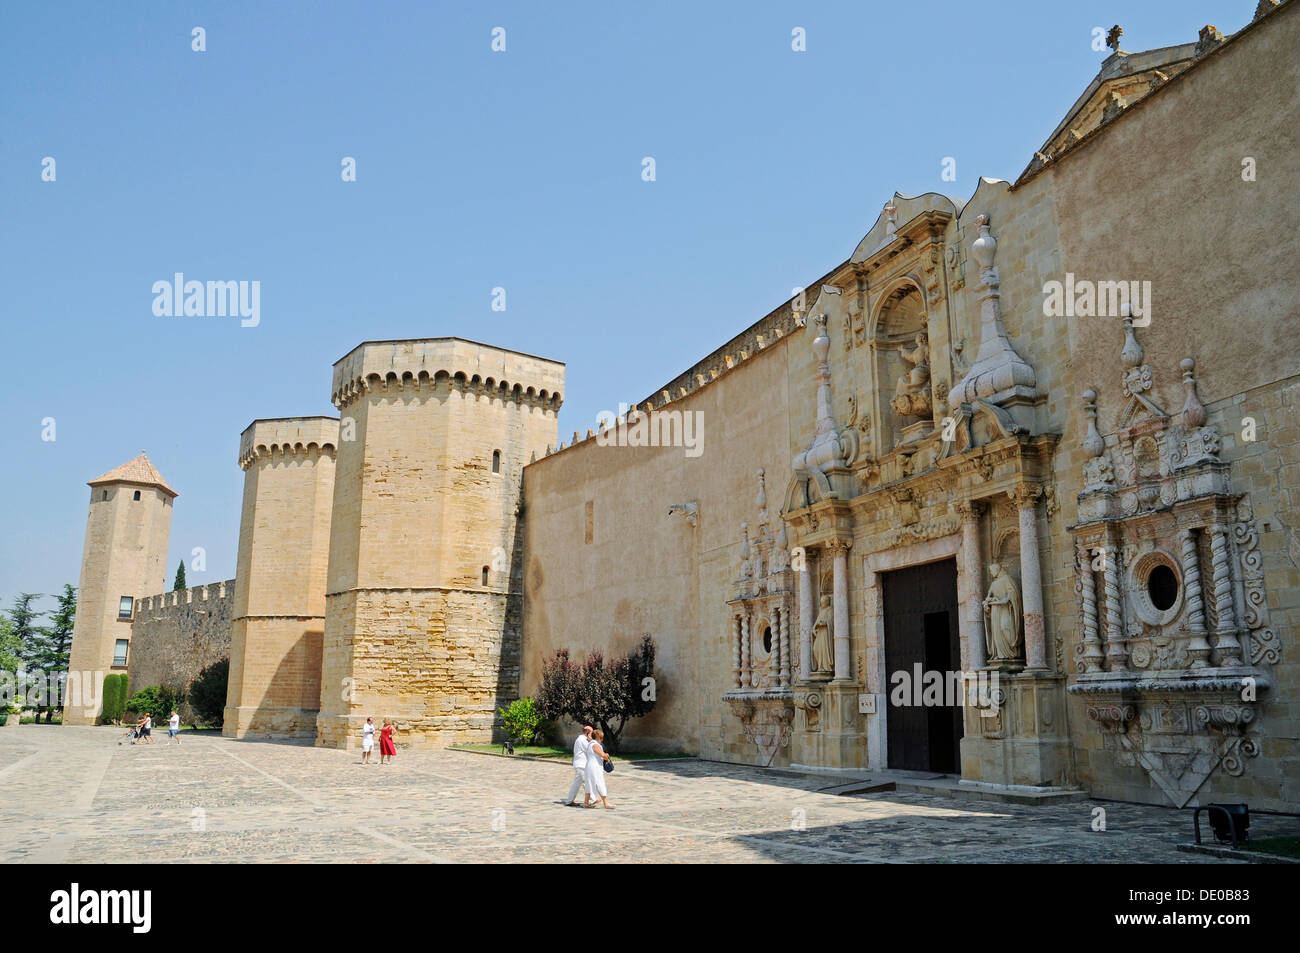 Monasterio Santa Maria de Poblet, Cistercian Abbey, UNESCO World Heritage Site, Poblet, Tarragona province, Catalonia, Spain Stock Photo